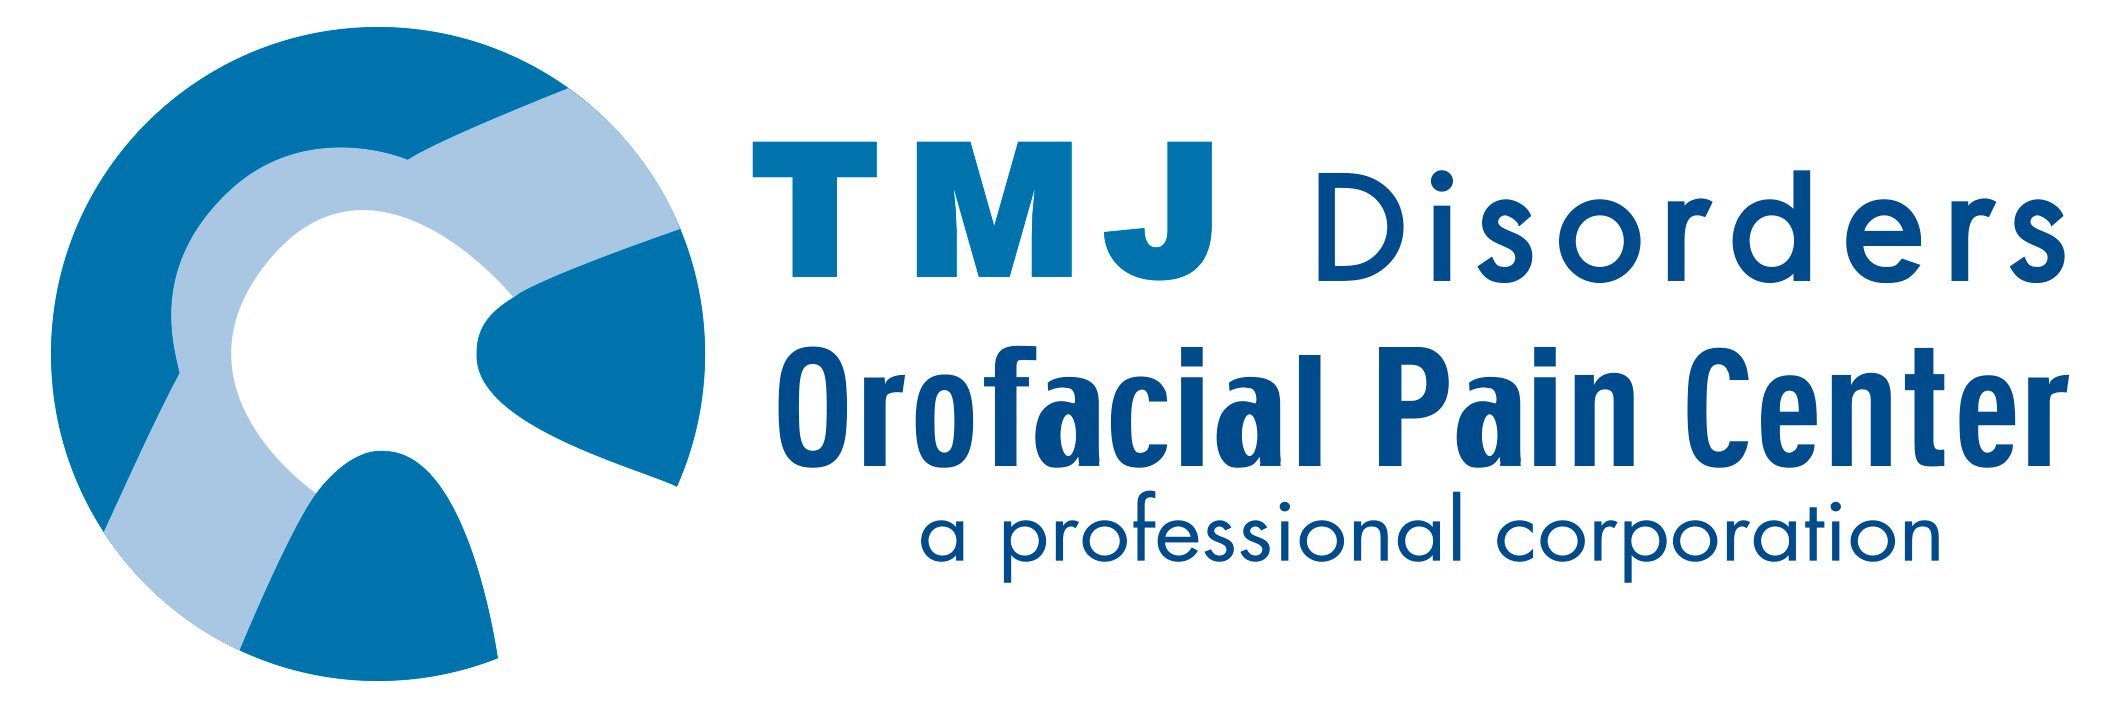 Jaw Pain, TMJ Disorders Orofacial Pain Center in Tucson Arizona